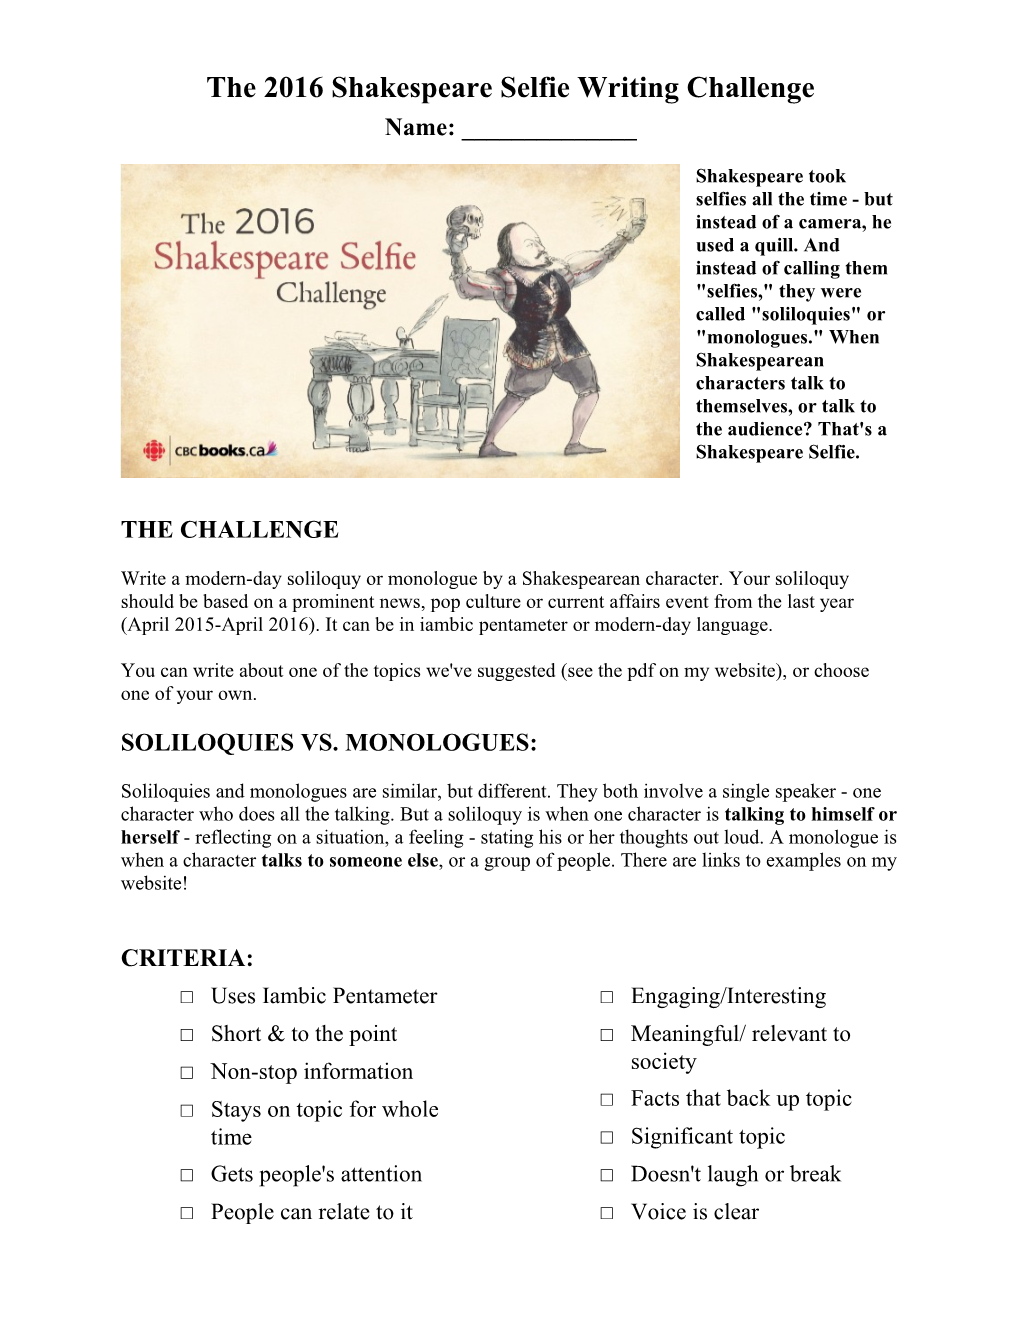 The 2016 Shakespeare Selfie Writing Challenge